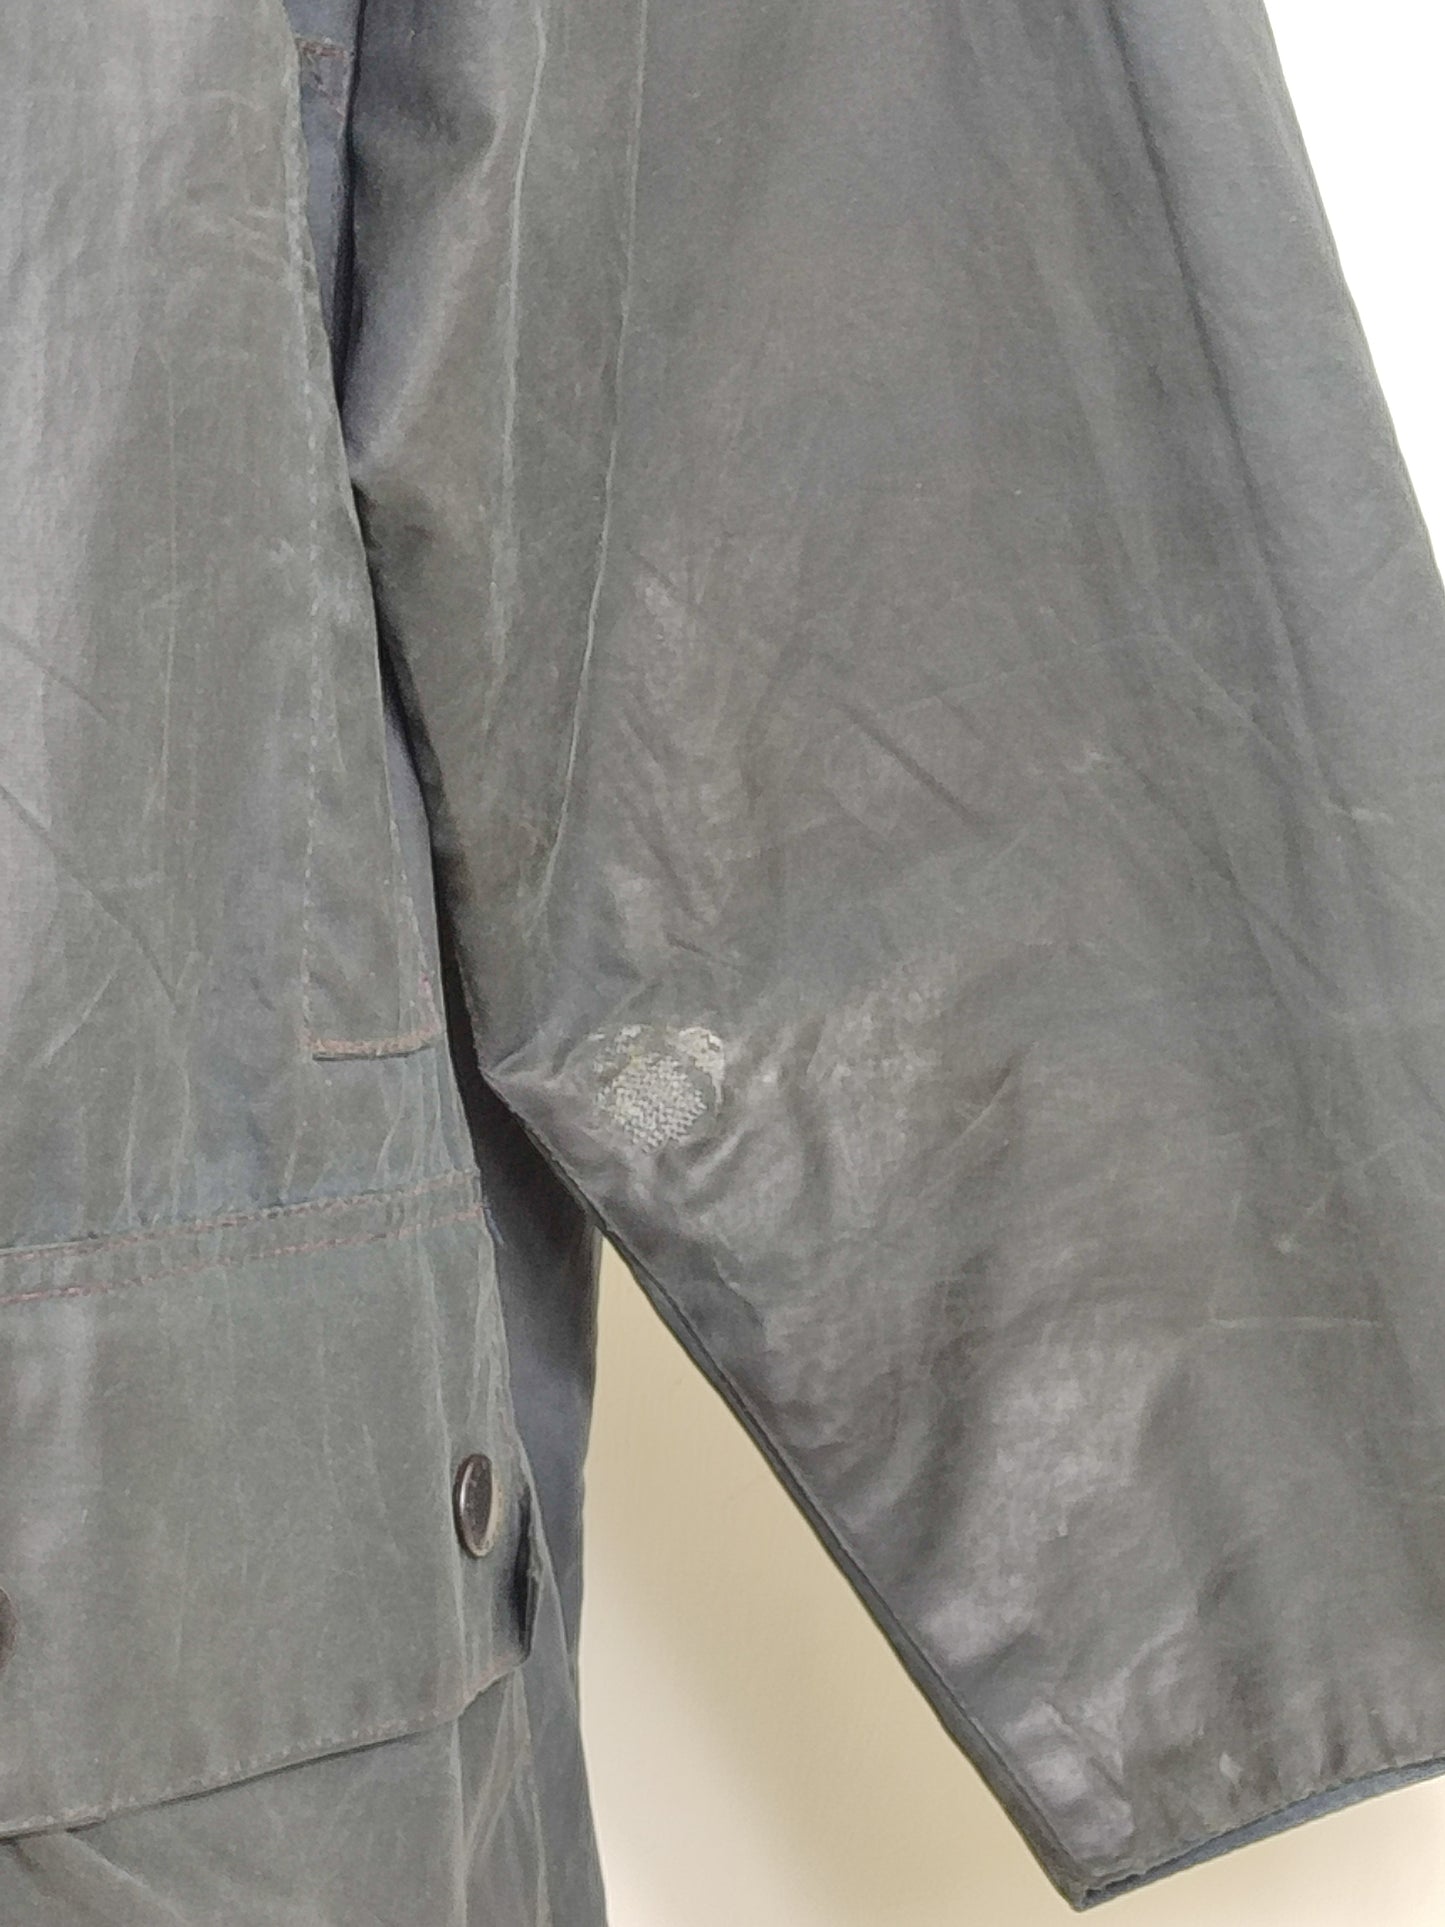 Barbour Giacca Beaufort vintage blu C52/132 cm Man Navy Wax Beaufort jacket XXXL